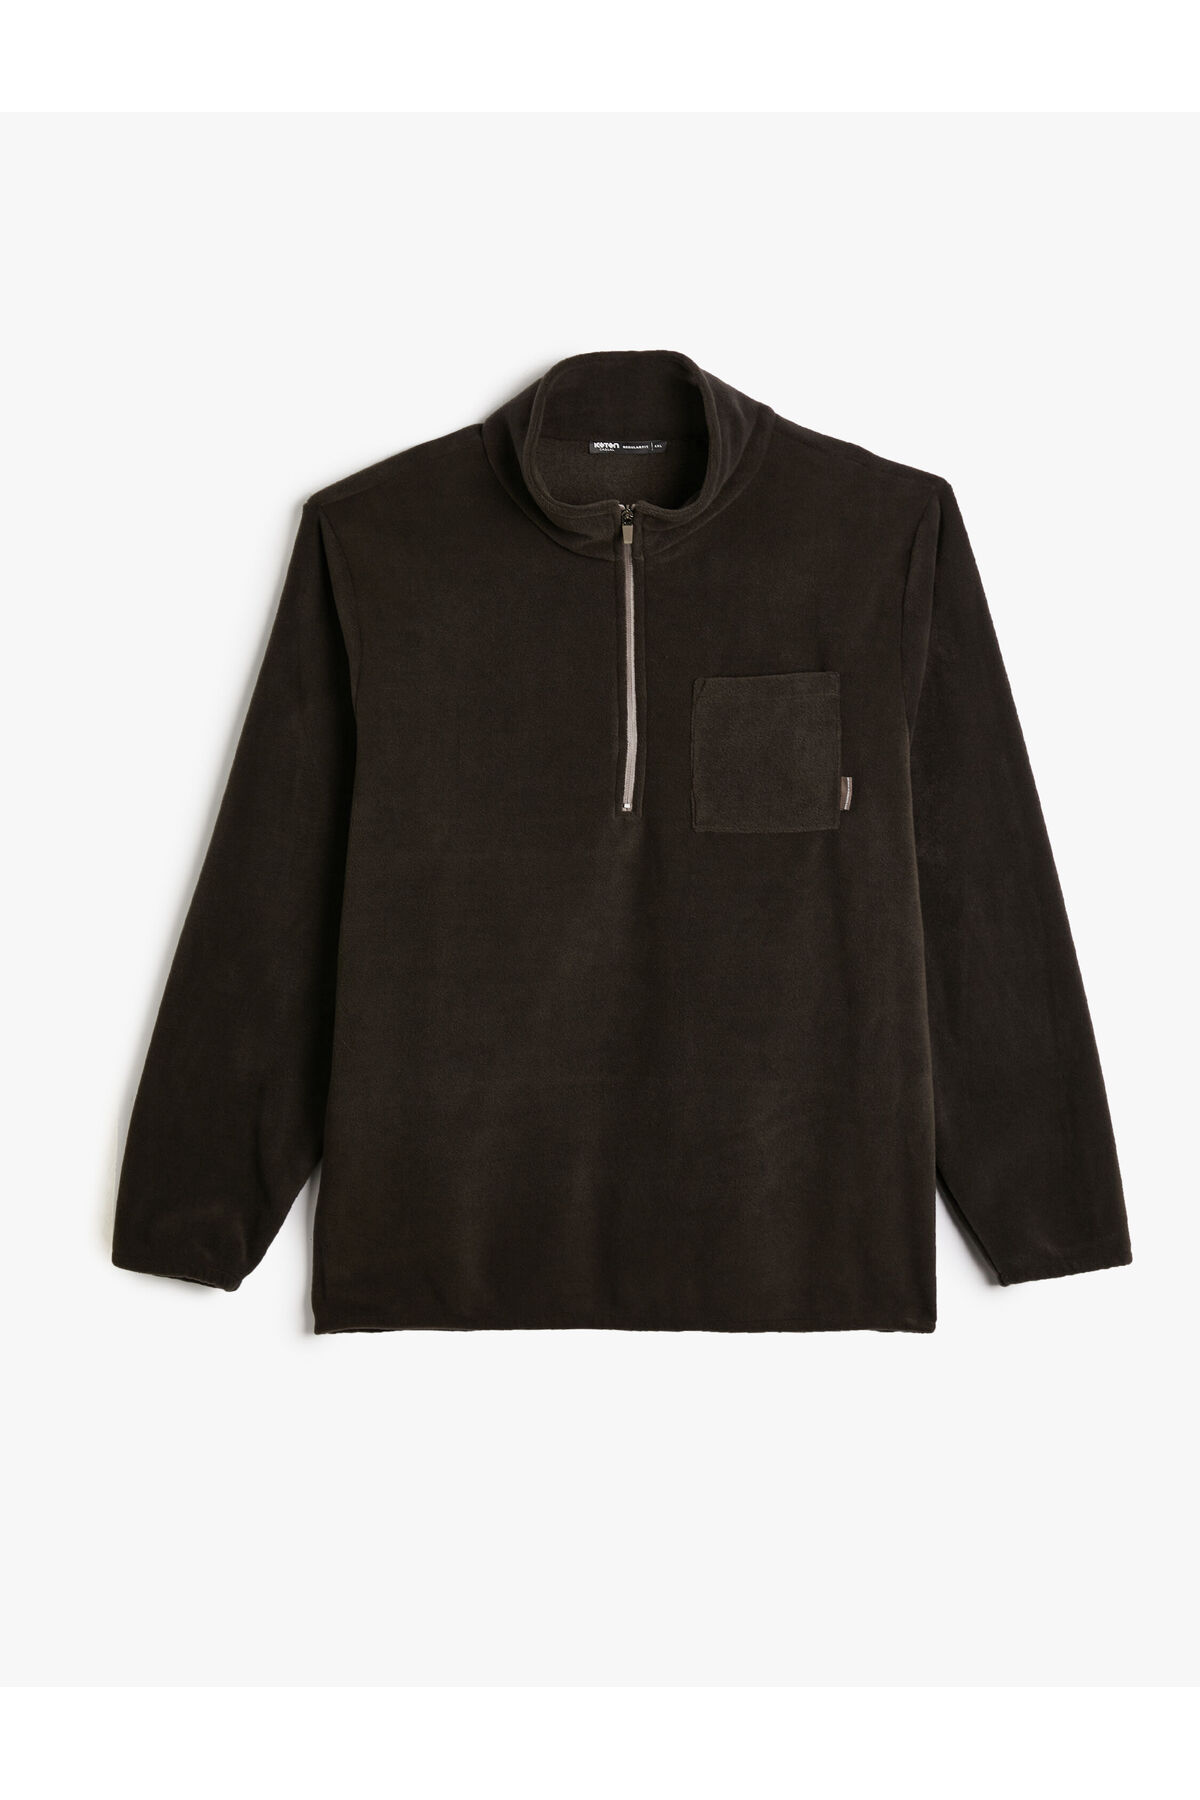 Levně Koton Polar Sweatshirt Half Zipper Pocket Detailed Stand Collar Soft Textured